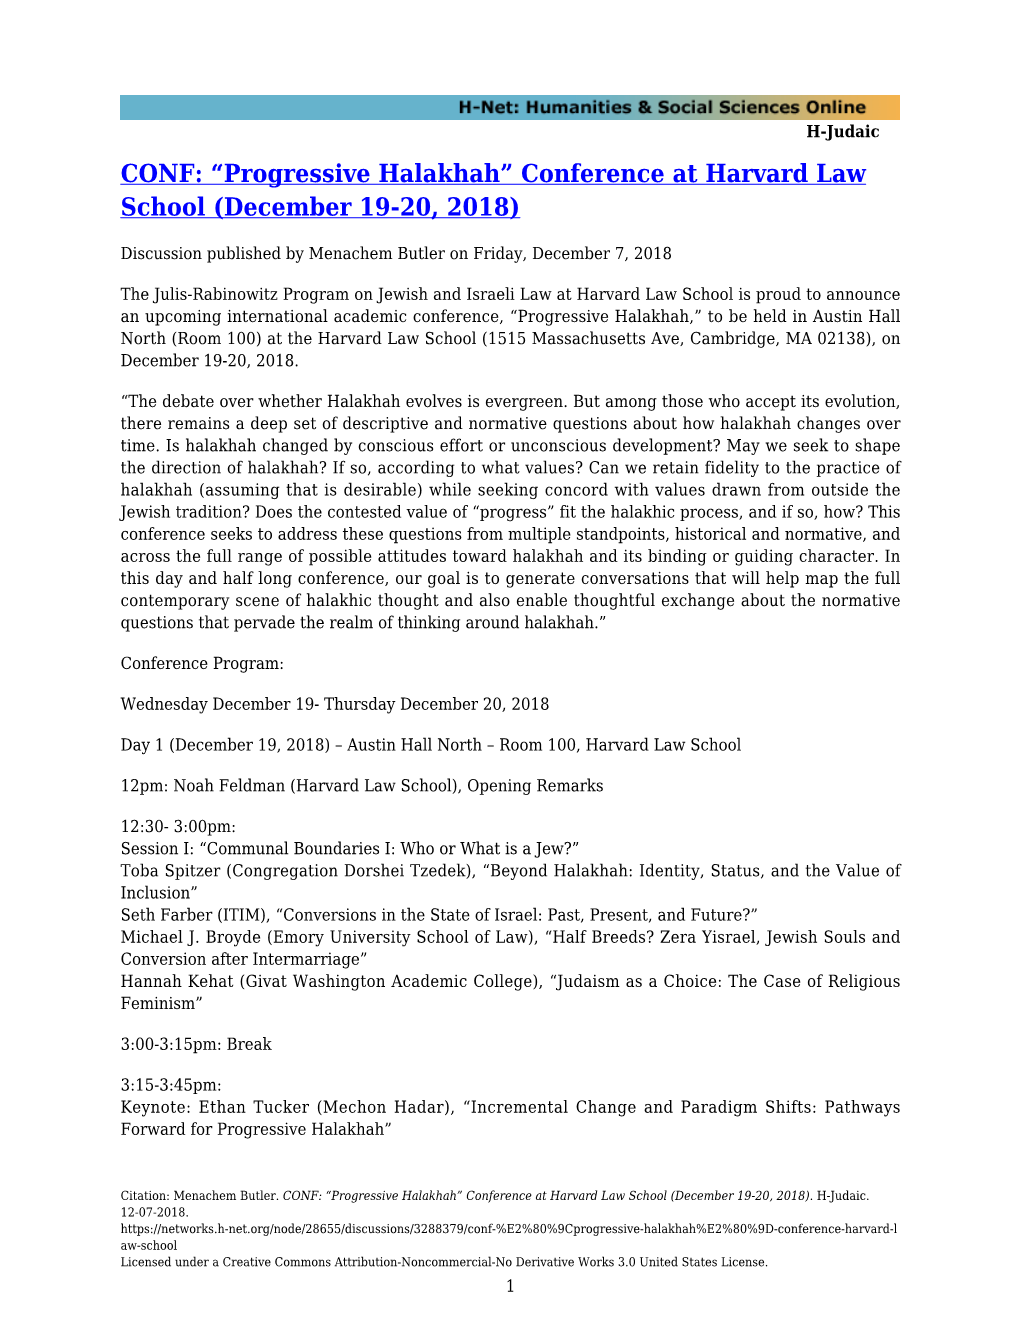 “Progressive Halakhah” Conference at Harvard Law School (December 19-20, 2018)